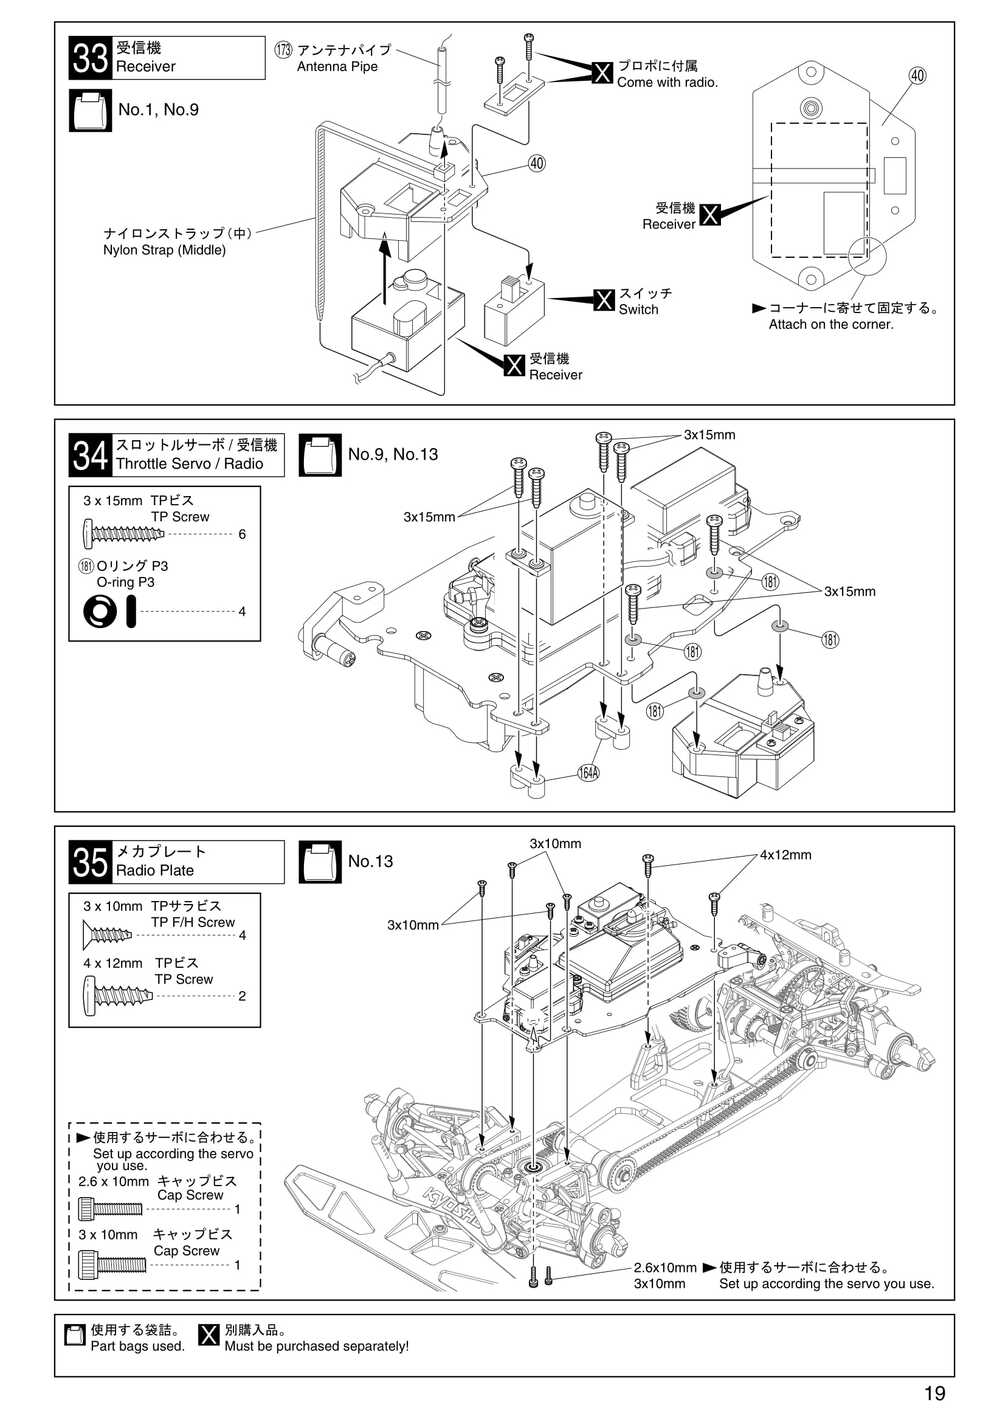 Kyosho - 31041 - Fantom Sports - Manual - Page 19